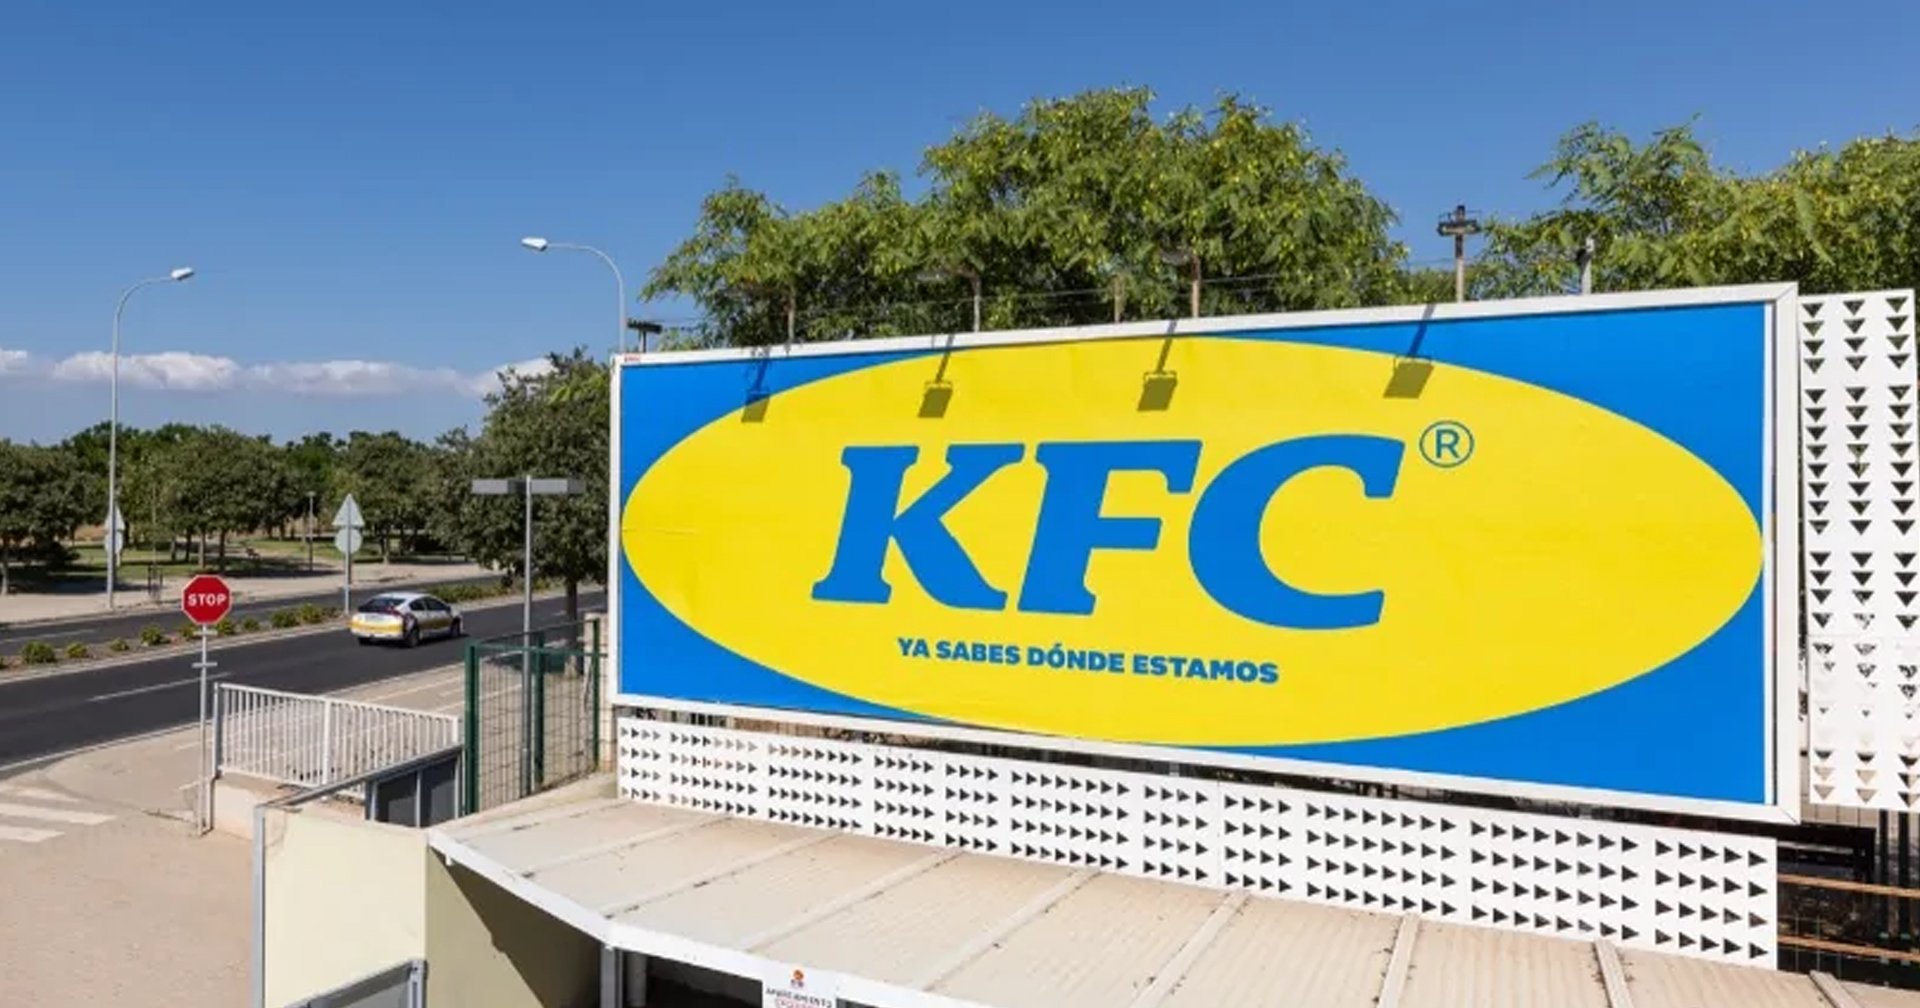 KFC ตีเนียนทำป้ายเลียนแบบ IKEA หยอกให้ลูกค้าเข้าร้านใหม่ (และถูกตอกกลับอย่างฮา)